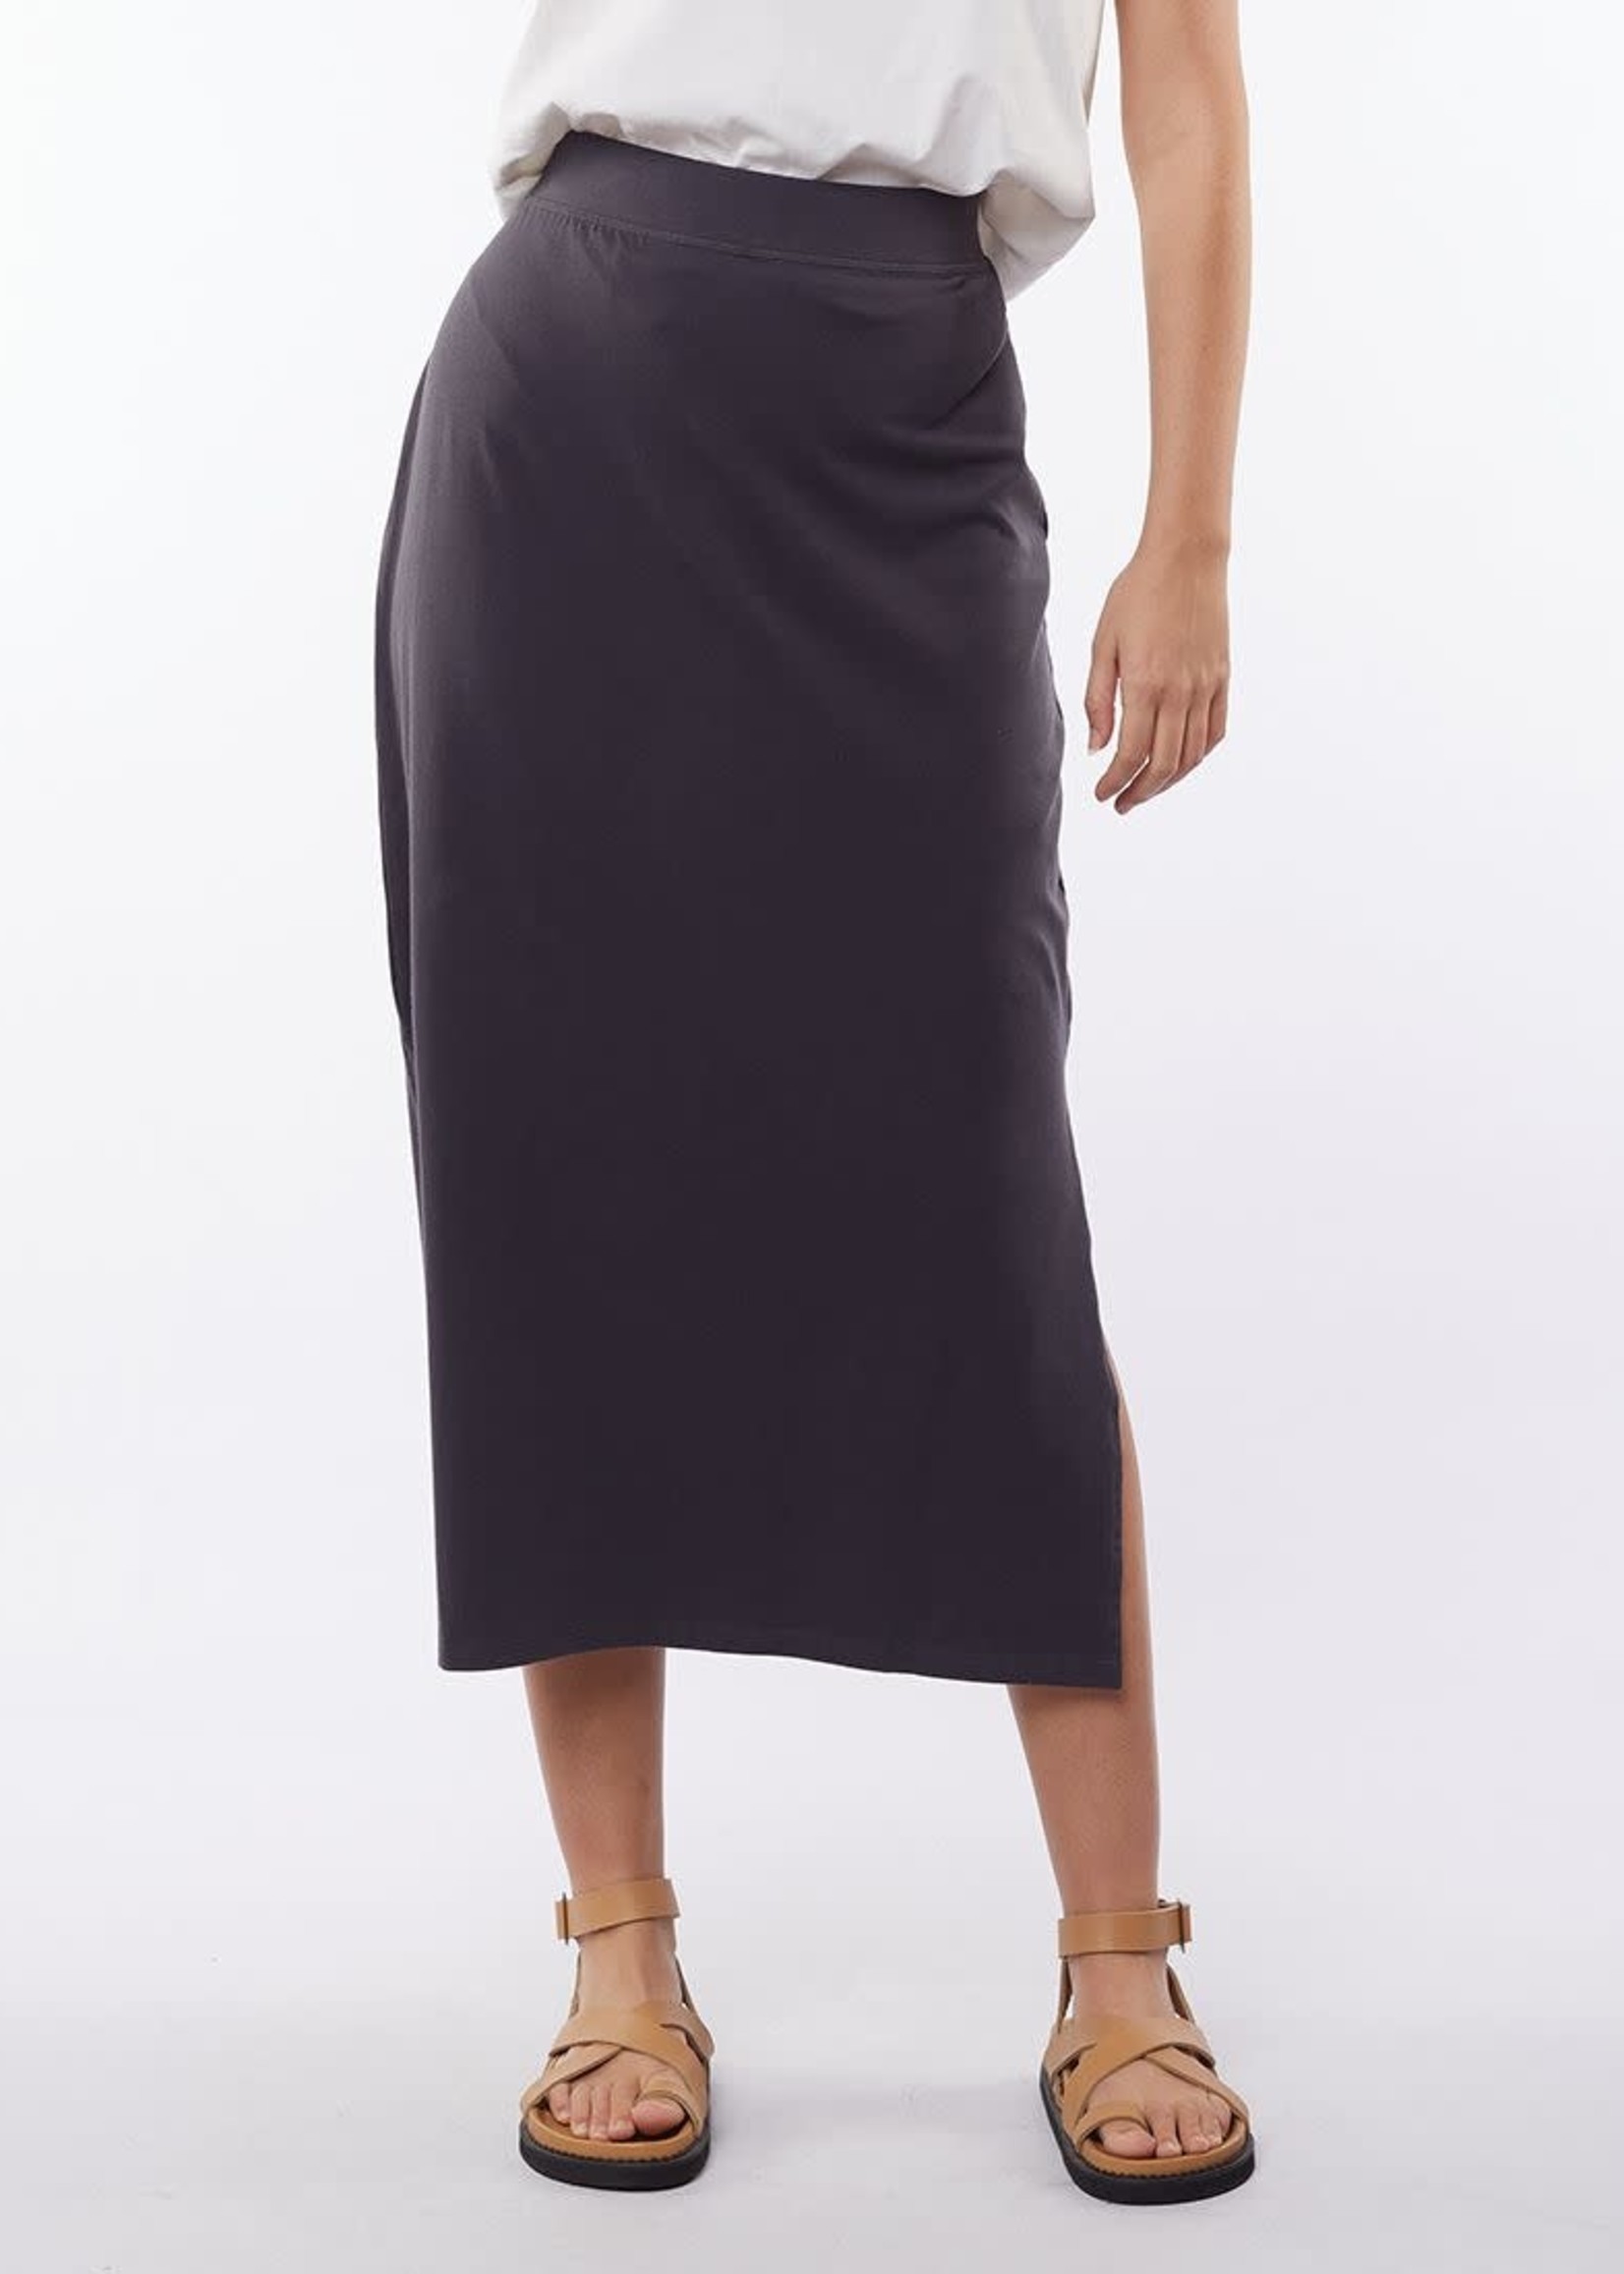 Foxwood Bilgola Skirt